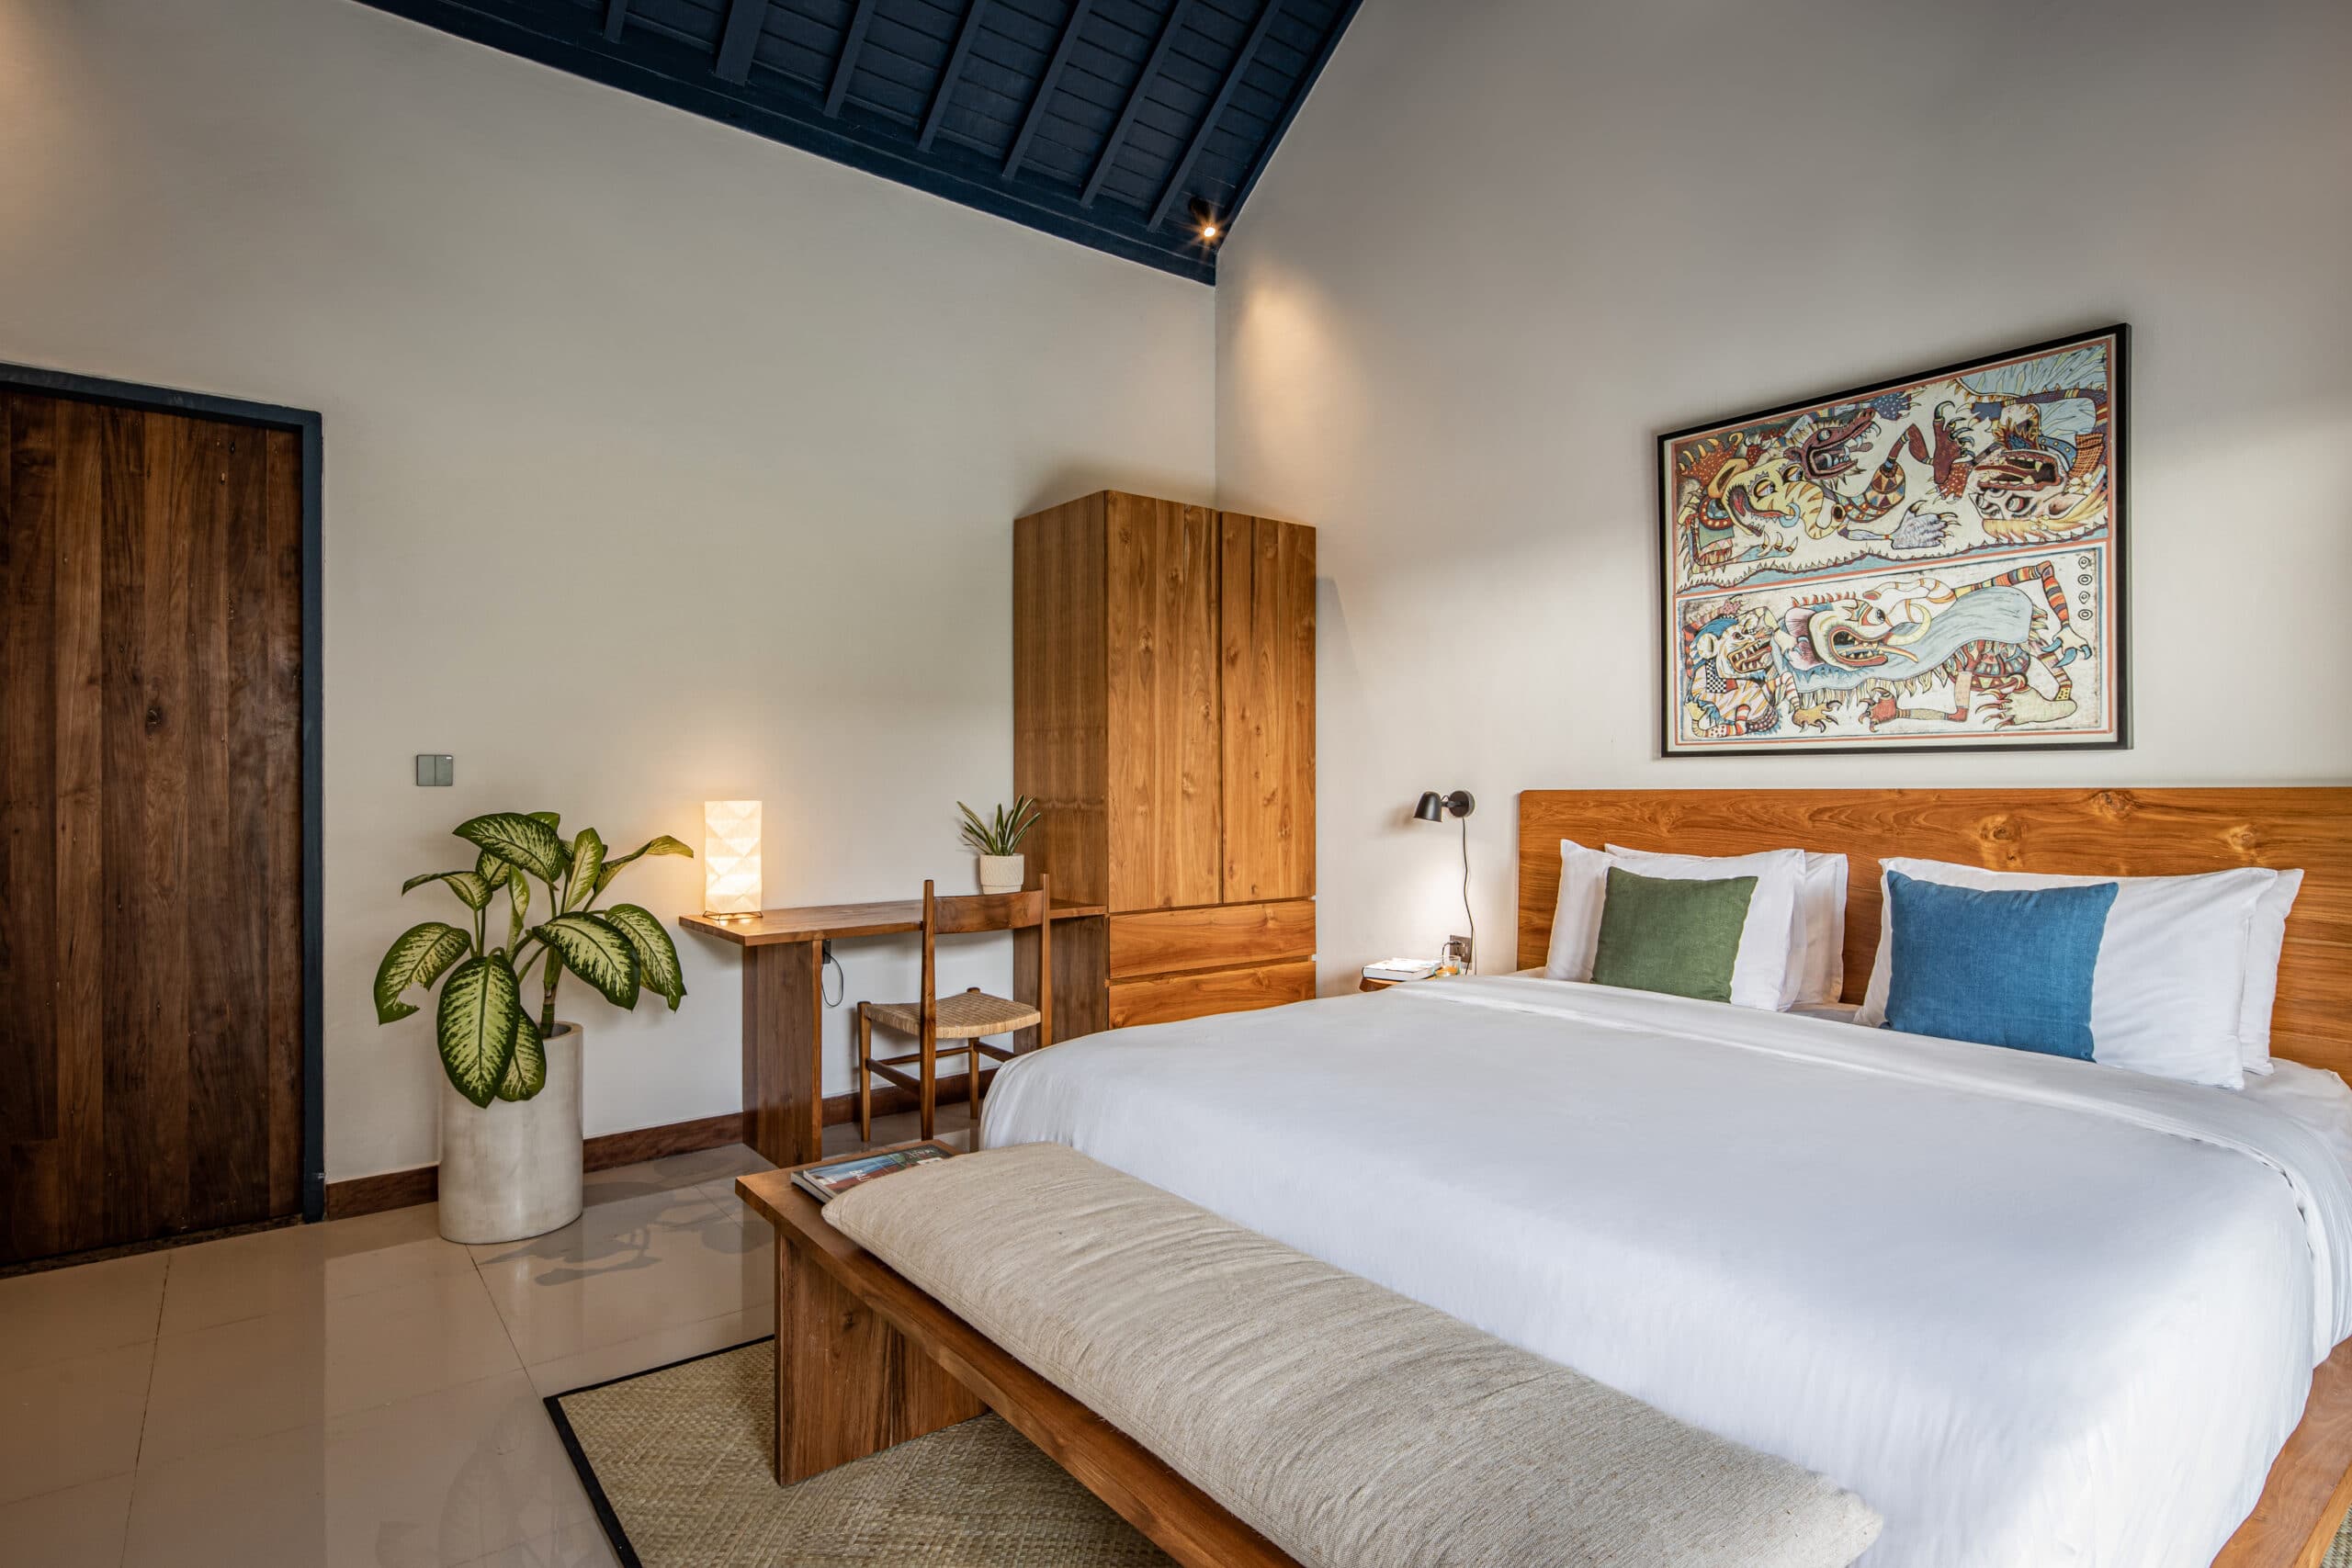 Design Assembly - Palm Studio - Bali Architect - Interior Design - Bali Villa - Bedroom - Wooden Facade